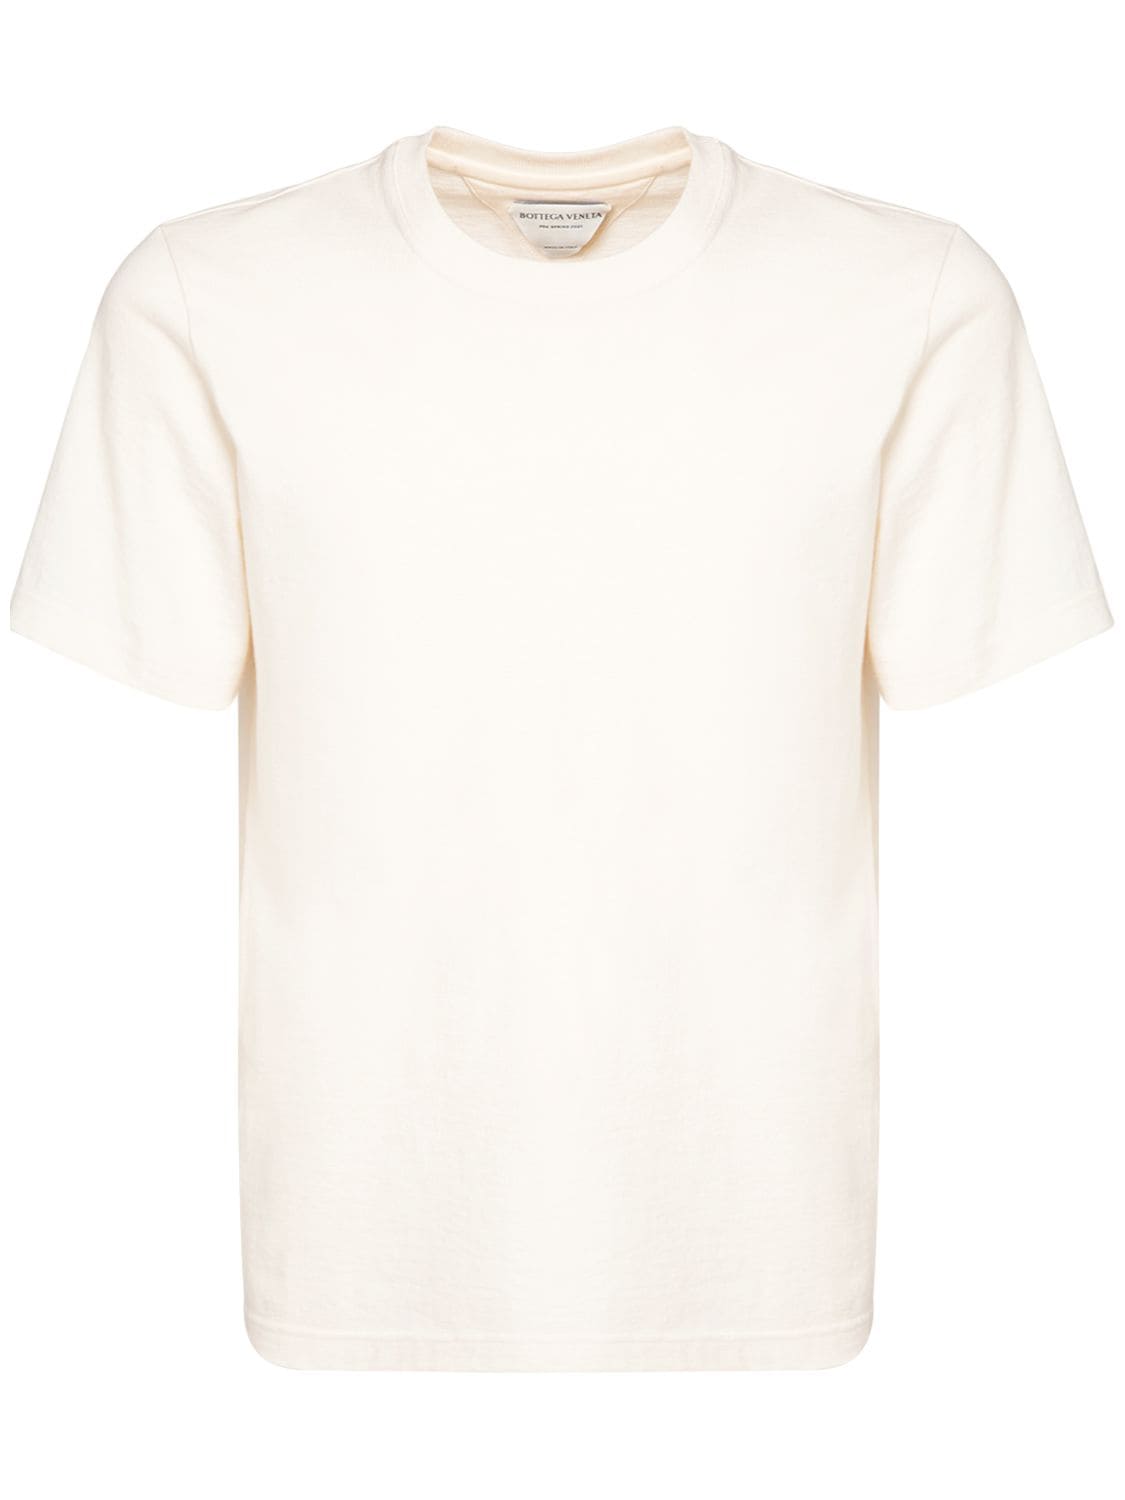 Bottega Veneta Light Cotton Jersey T-shirt In Chalk